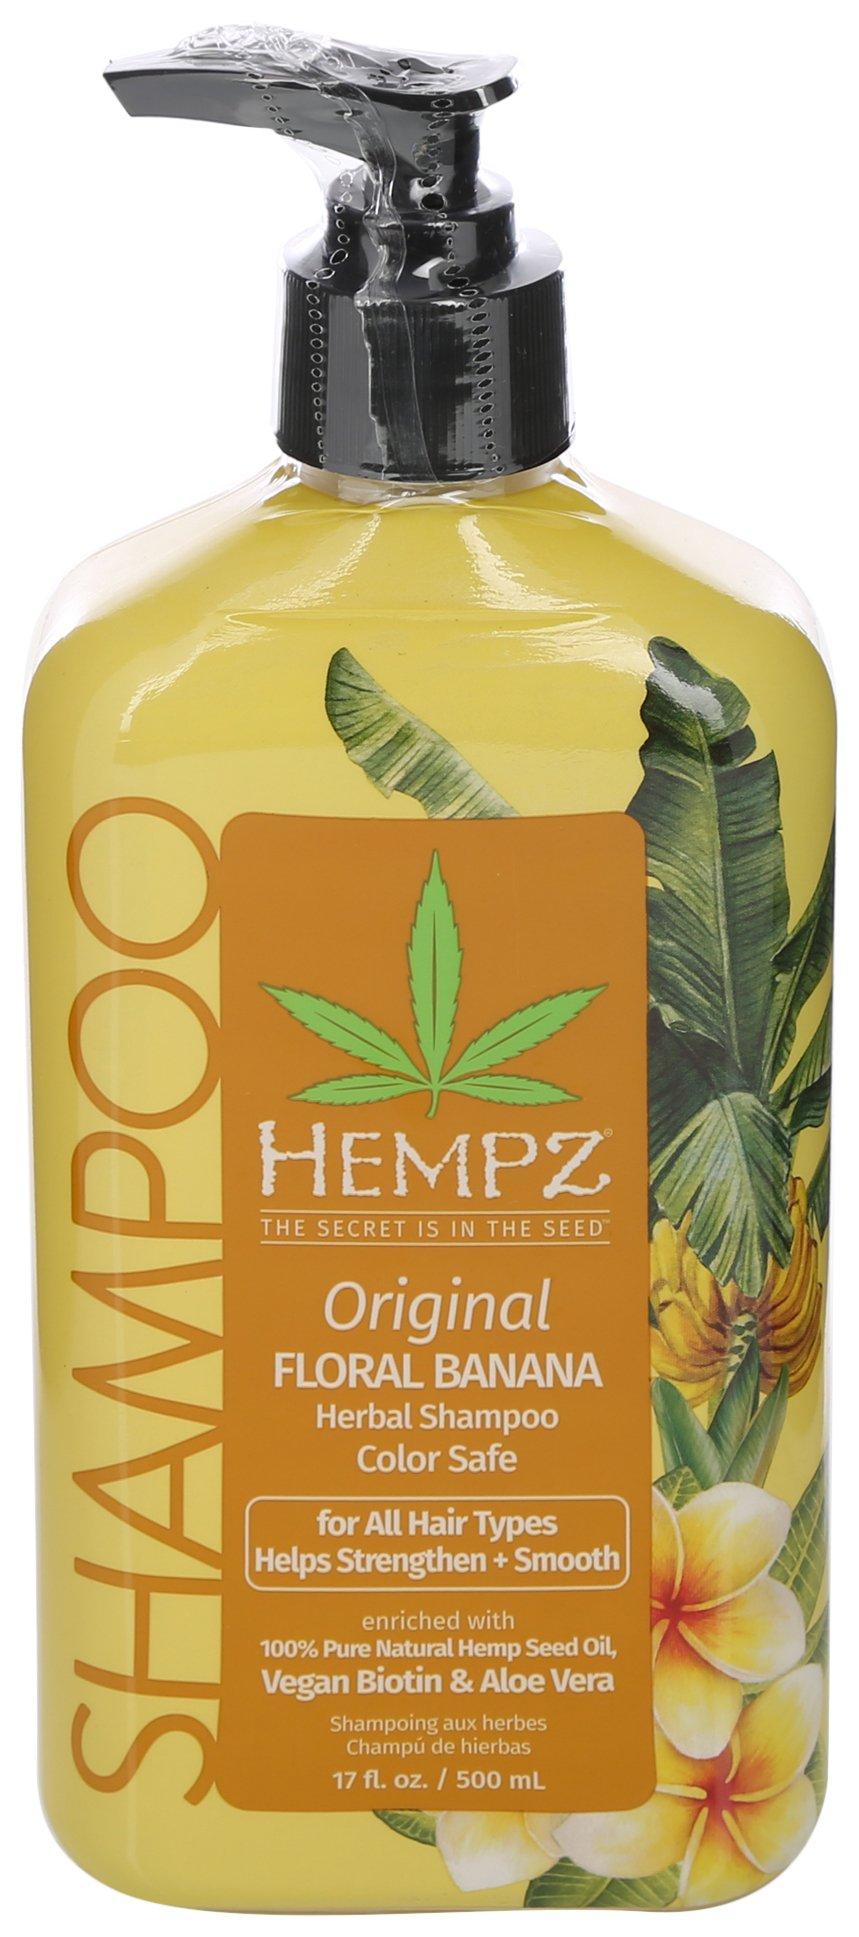 17 Fl.Oz. Original Floral Banana Herbal Shampoo